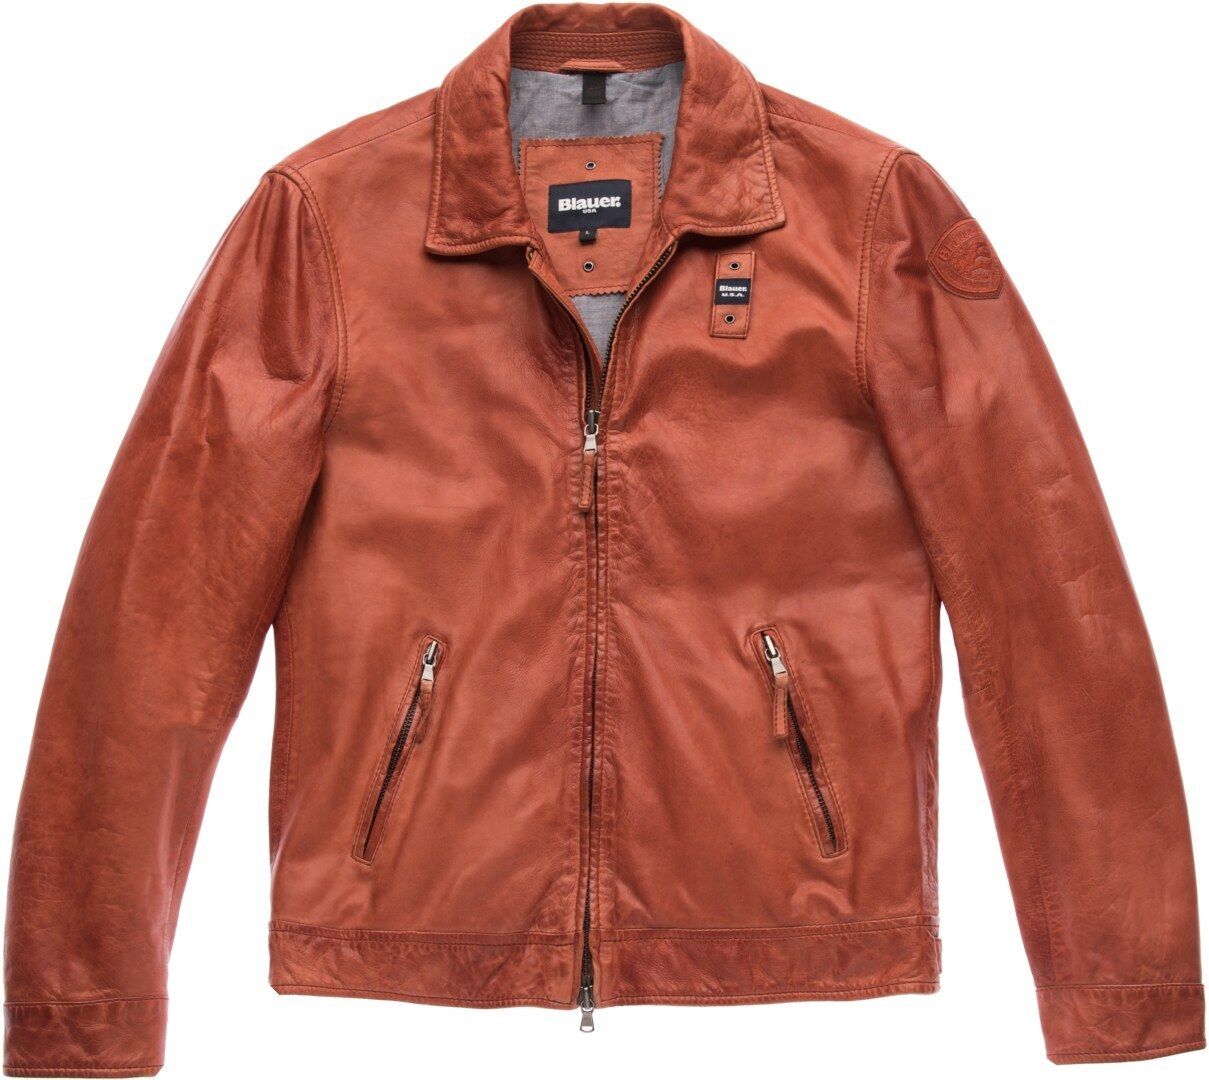 Blauer Usa Jackson Leather Jacket  - Red